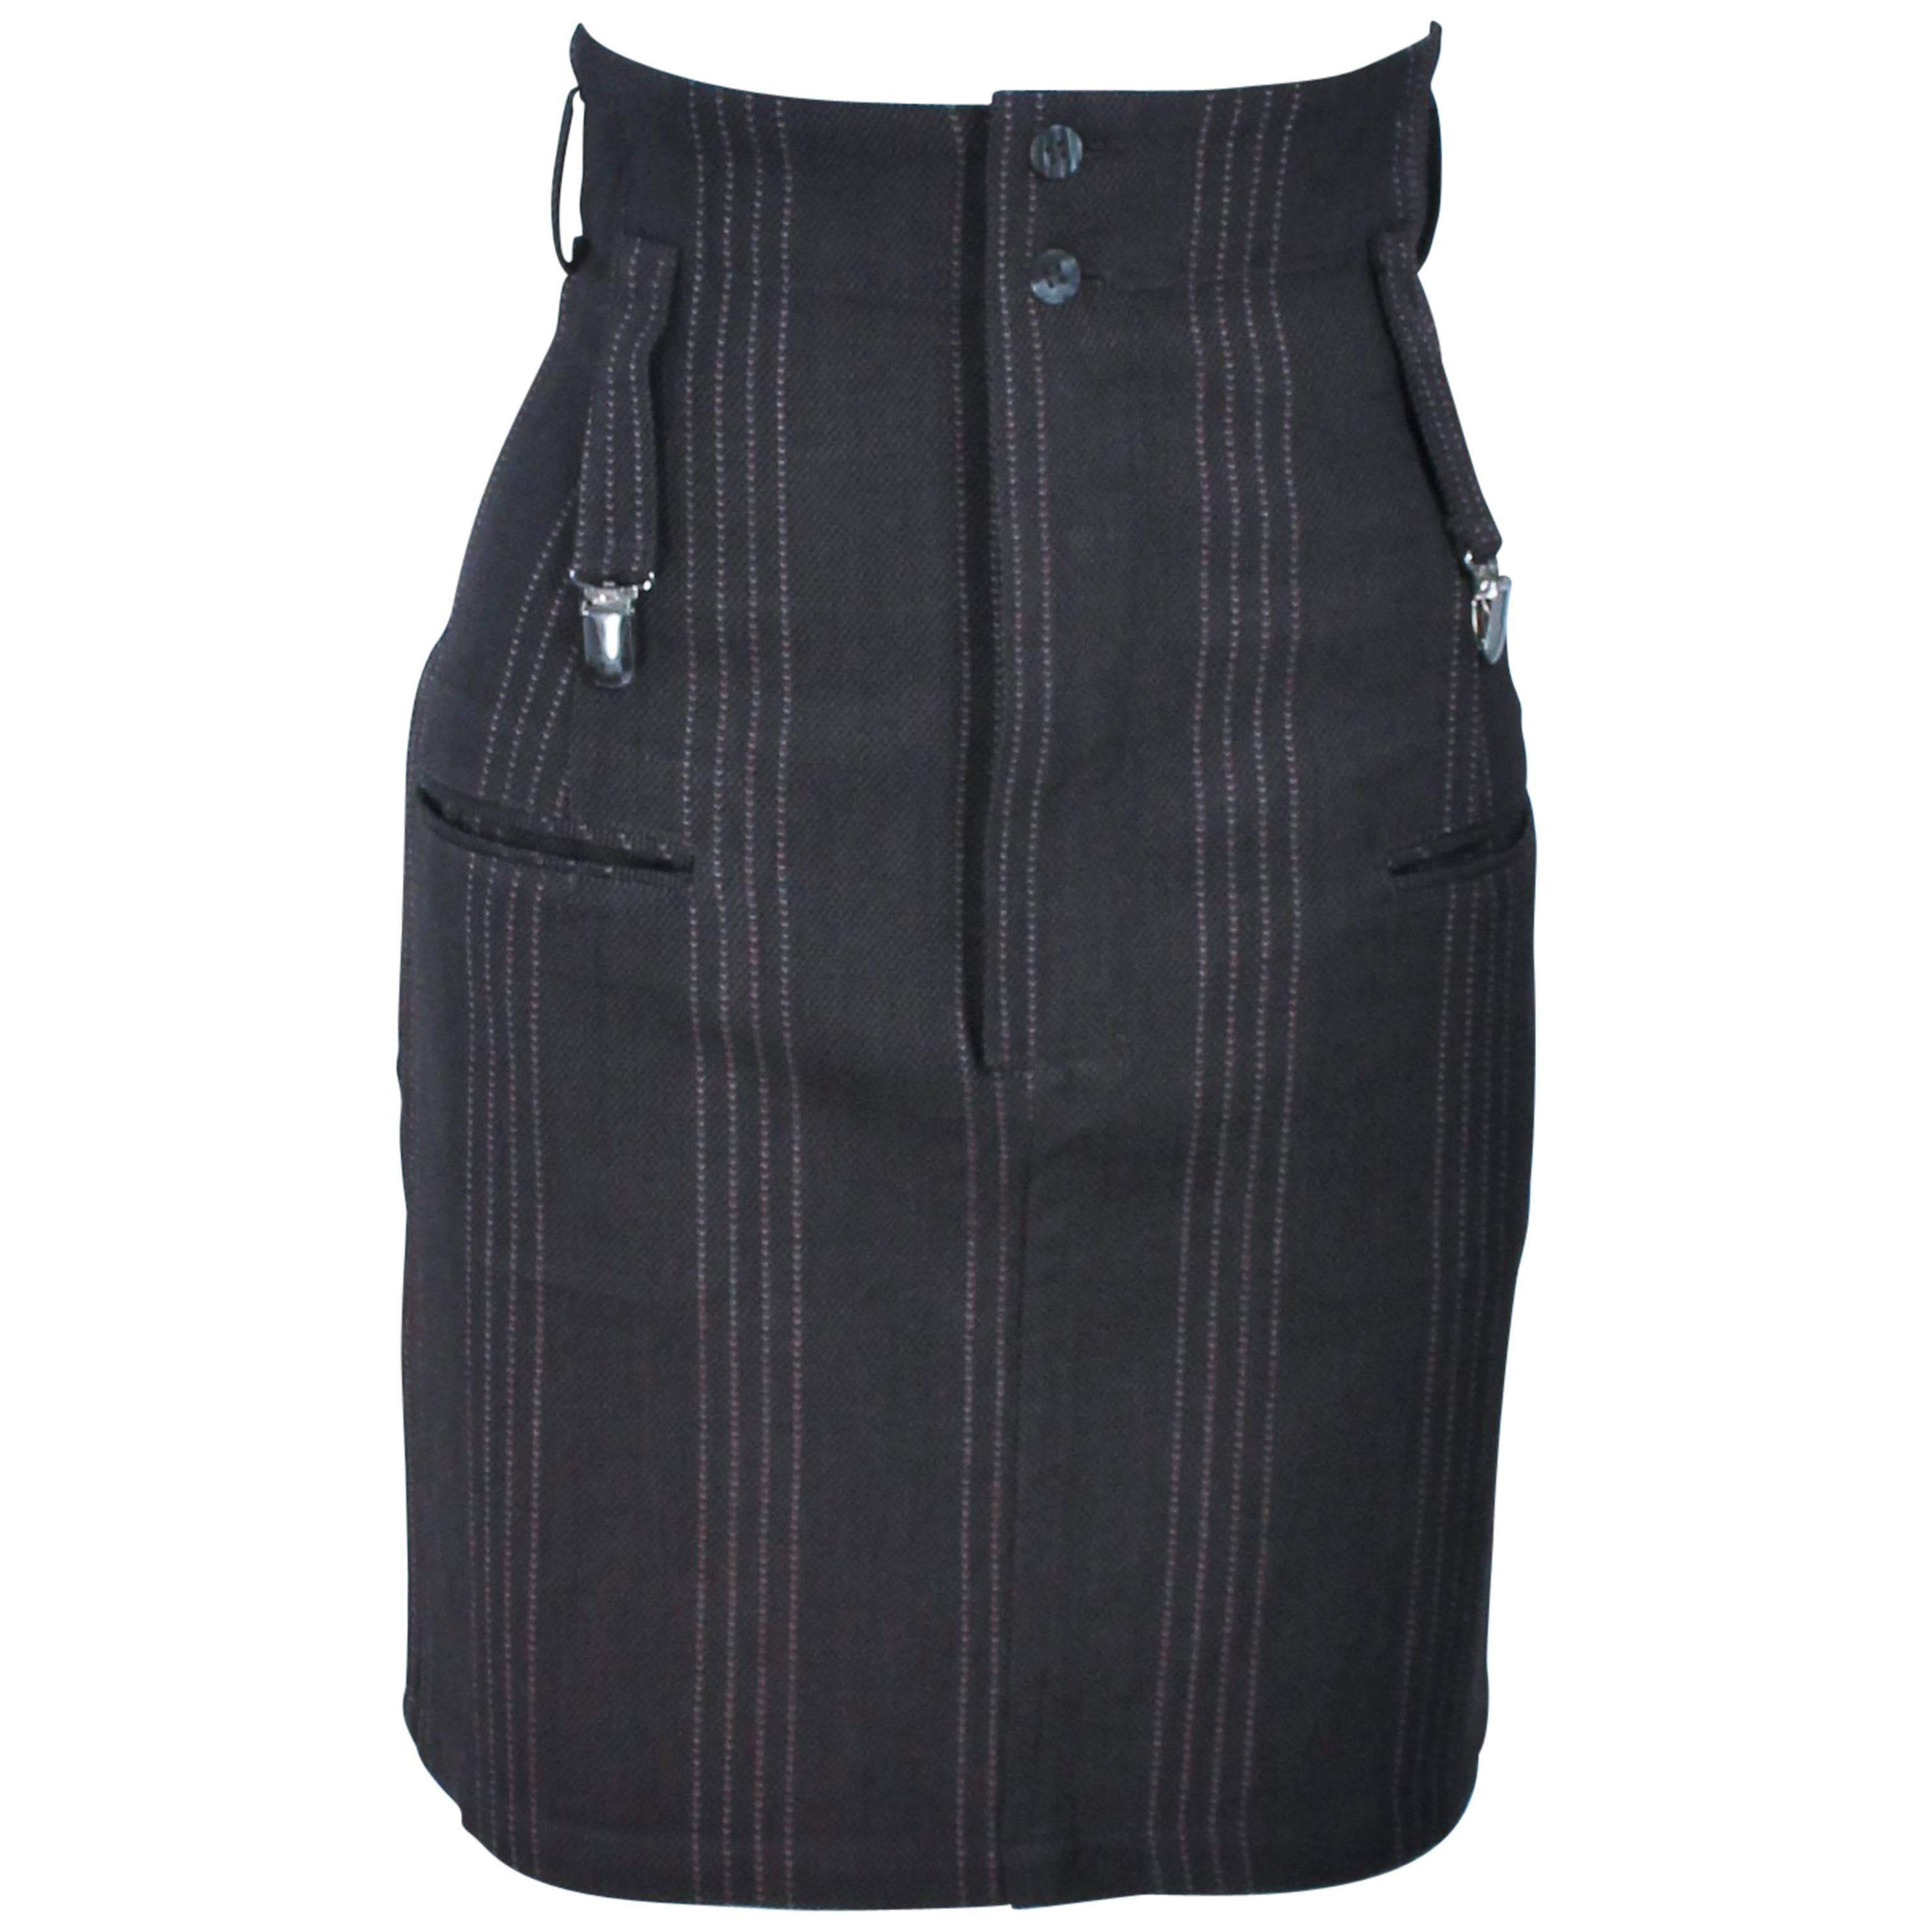 YOHJI YAMAMOTO High Waist Pinstripe Wool Skirt with Suspender Detail Size 2